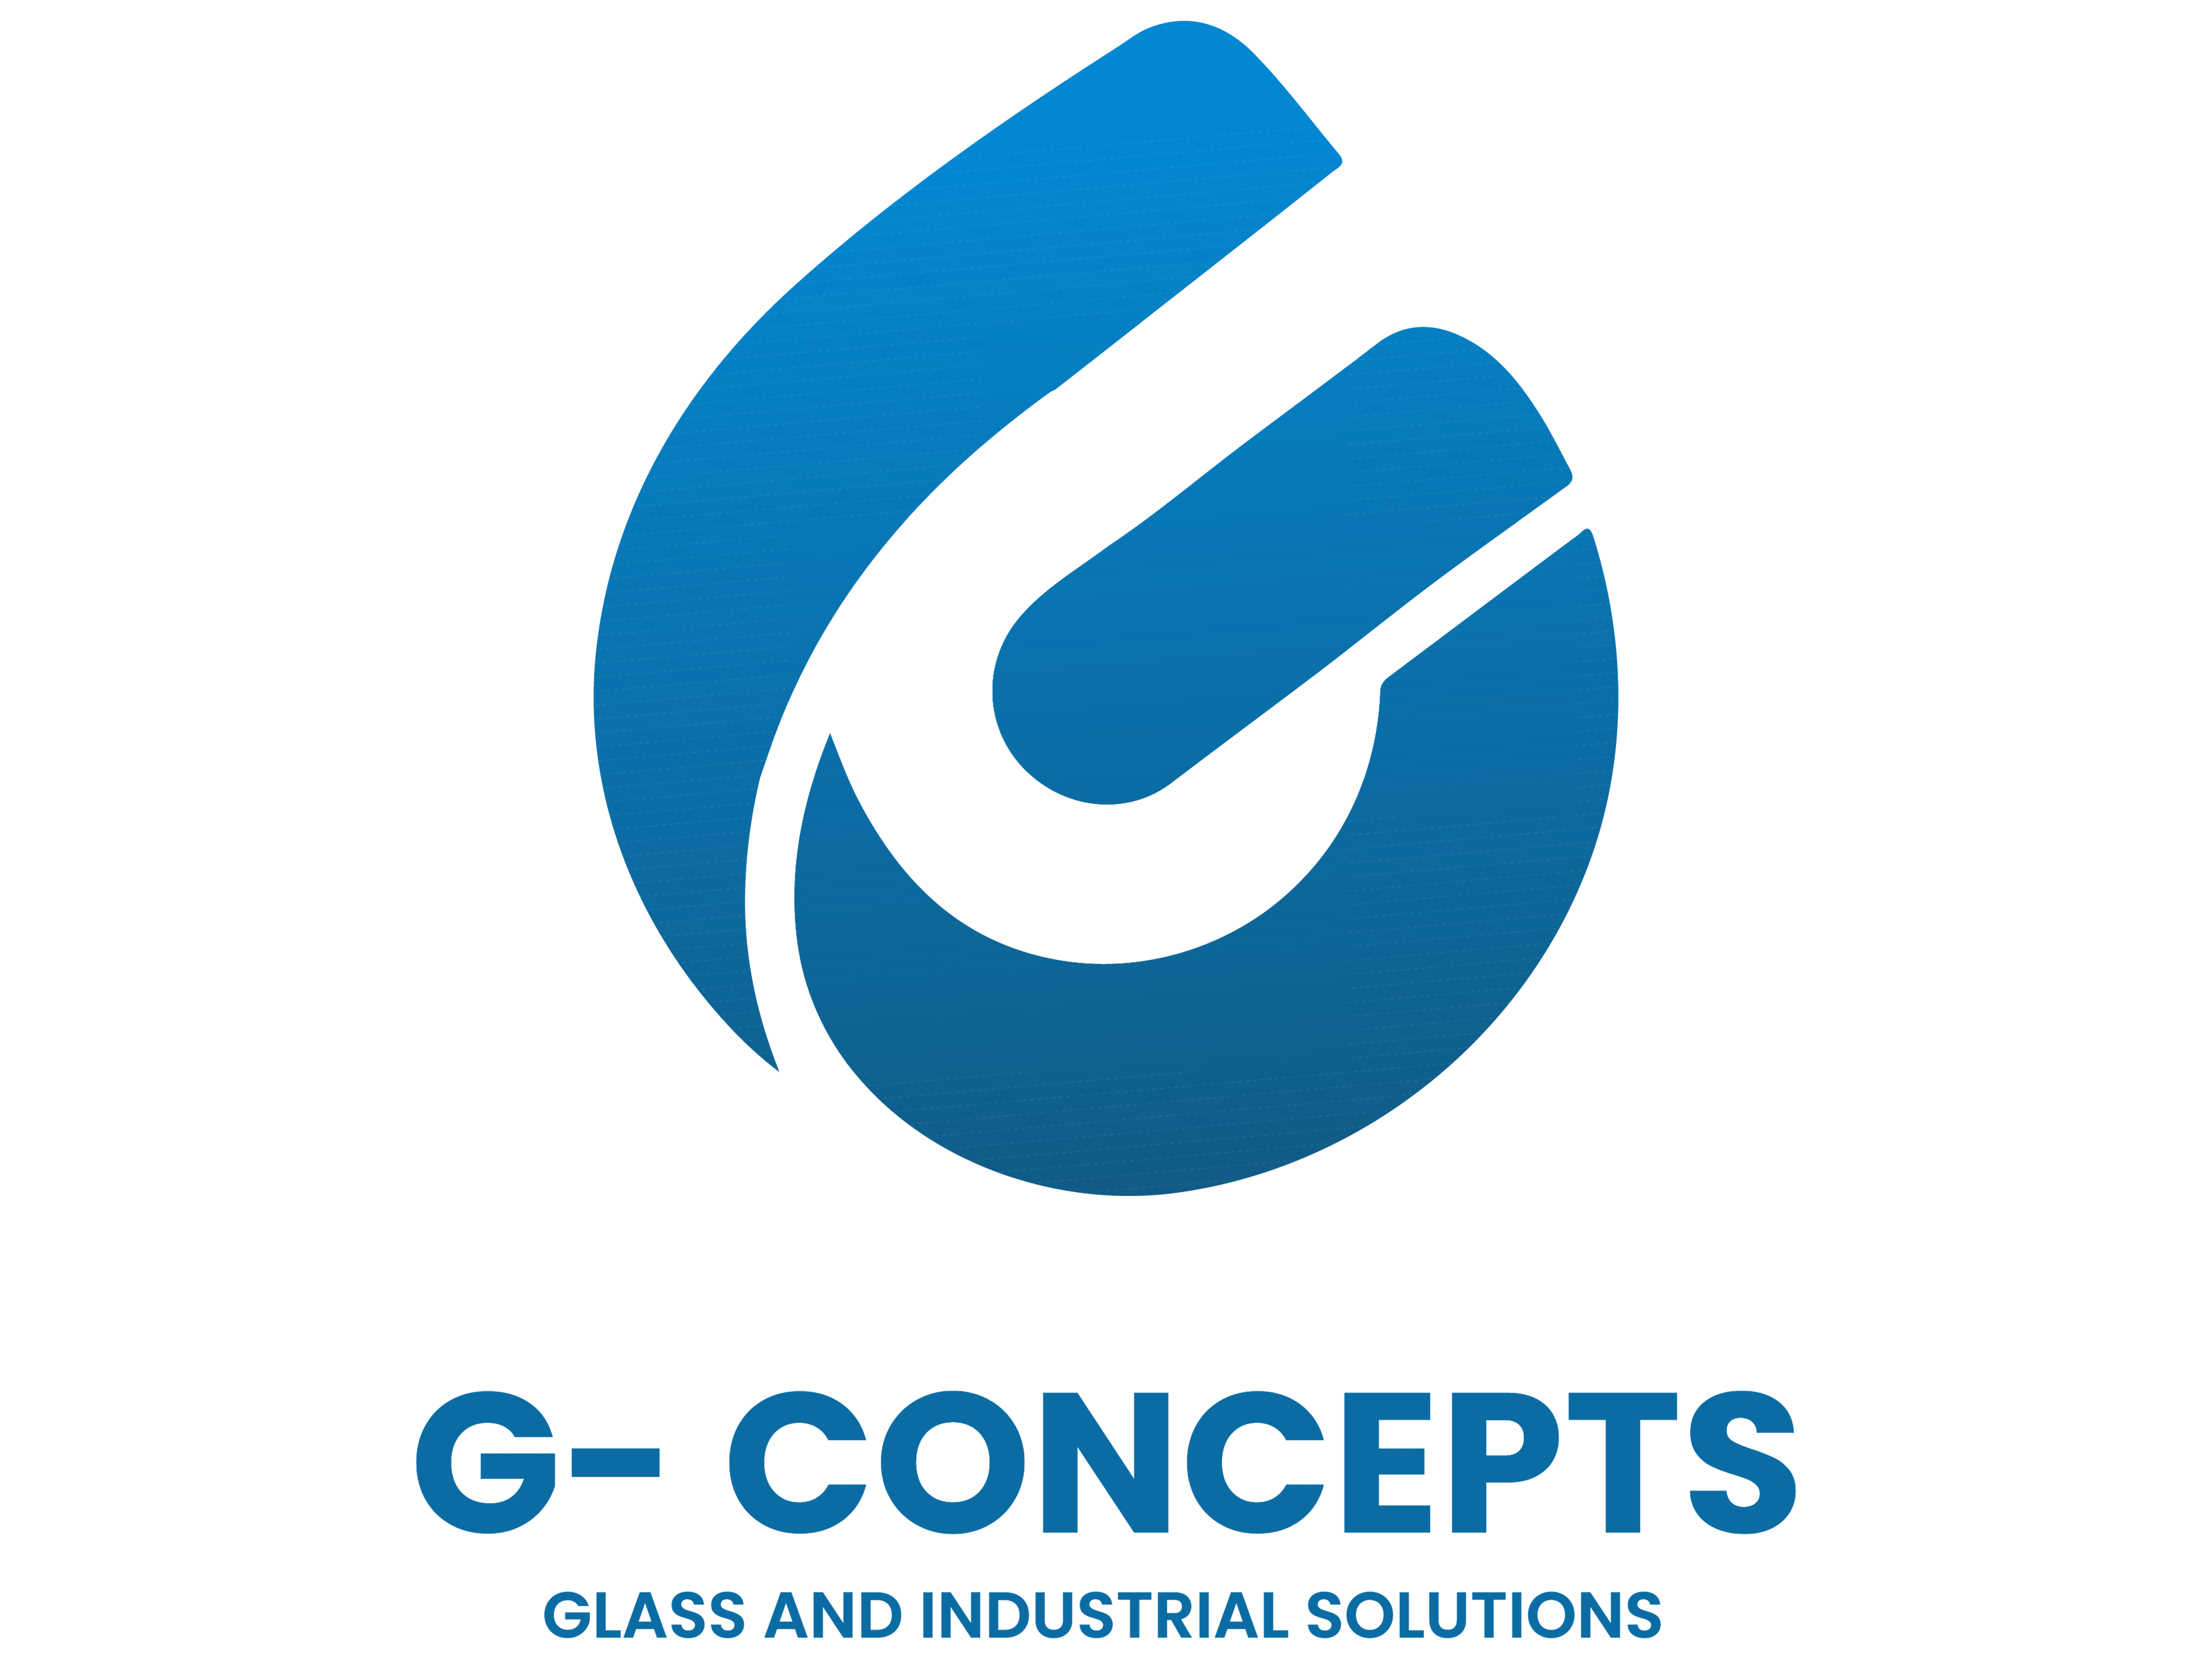 G Concepts|IT Services|Professional Services